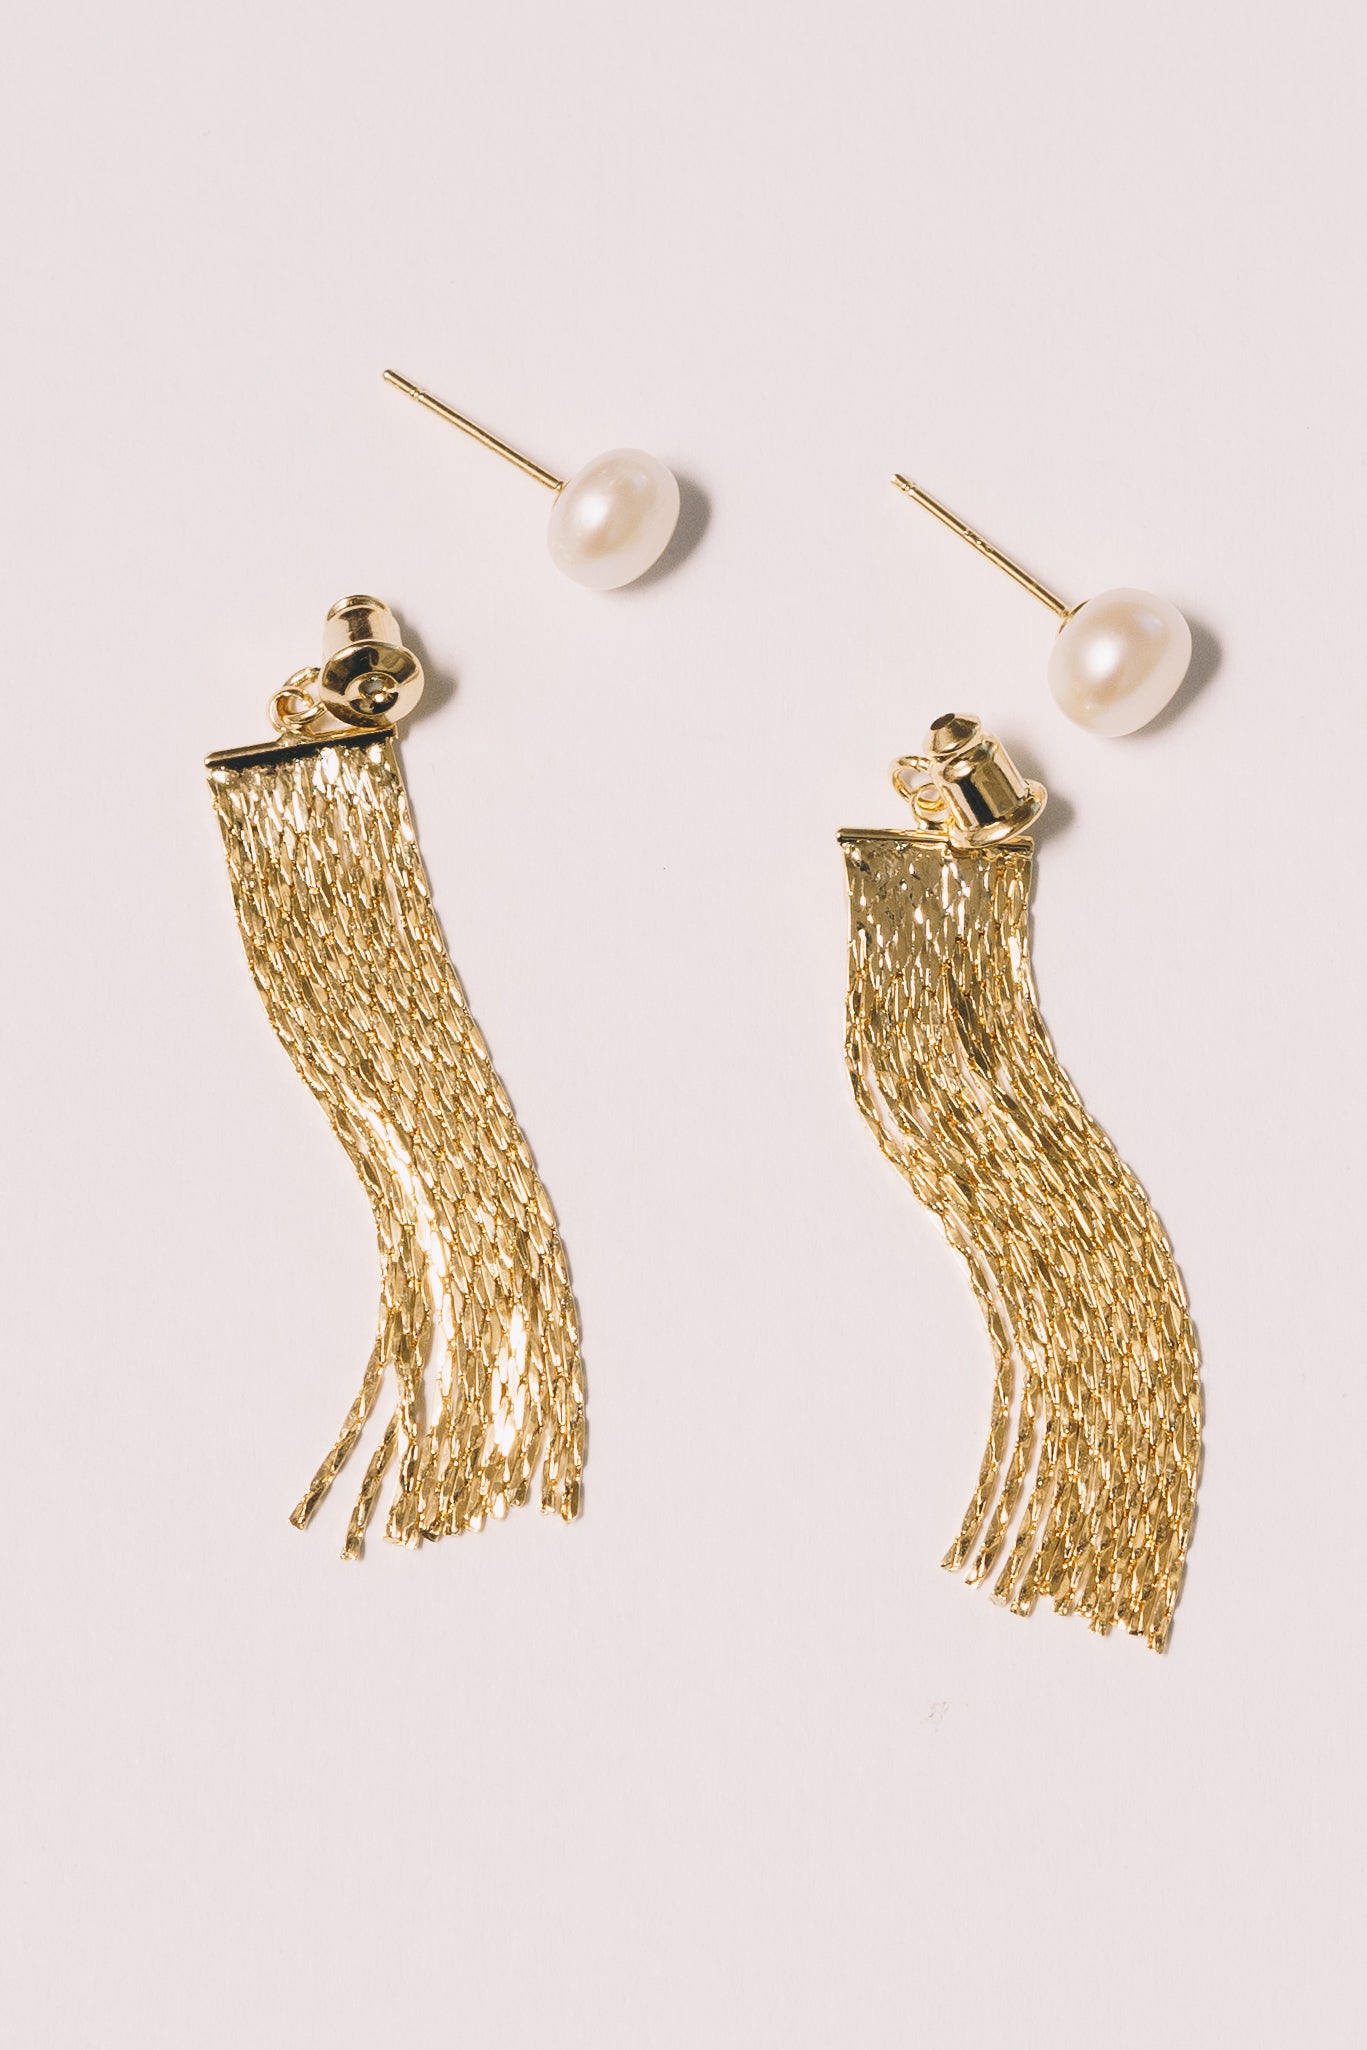 pearl studs with gold tassel ear jackets closeup